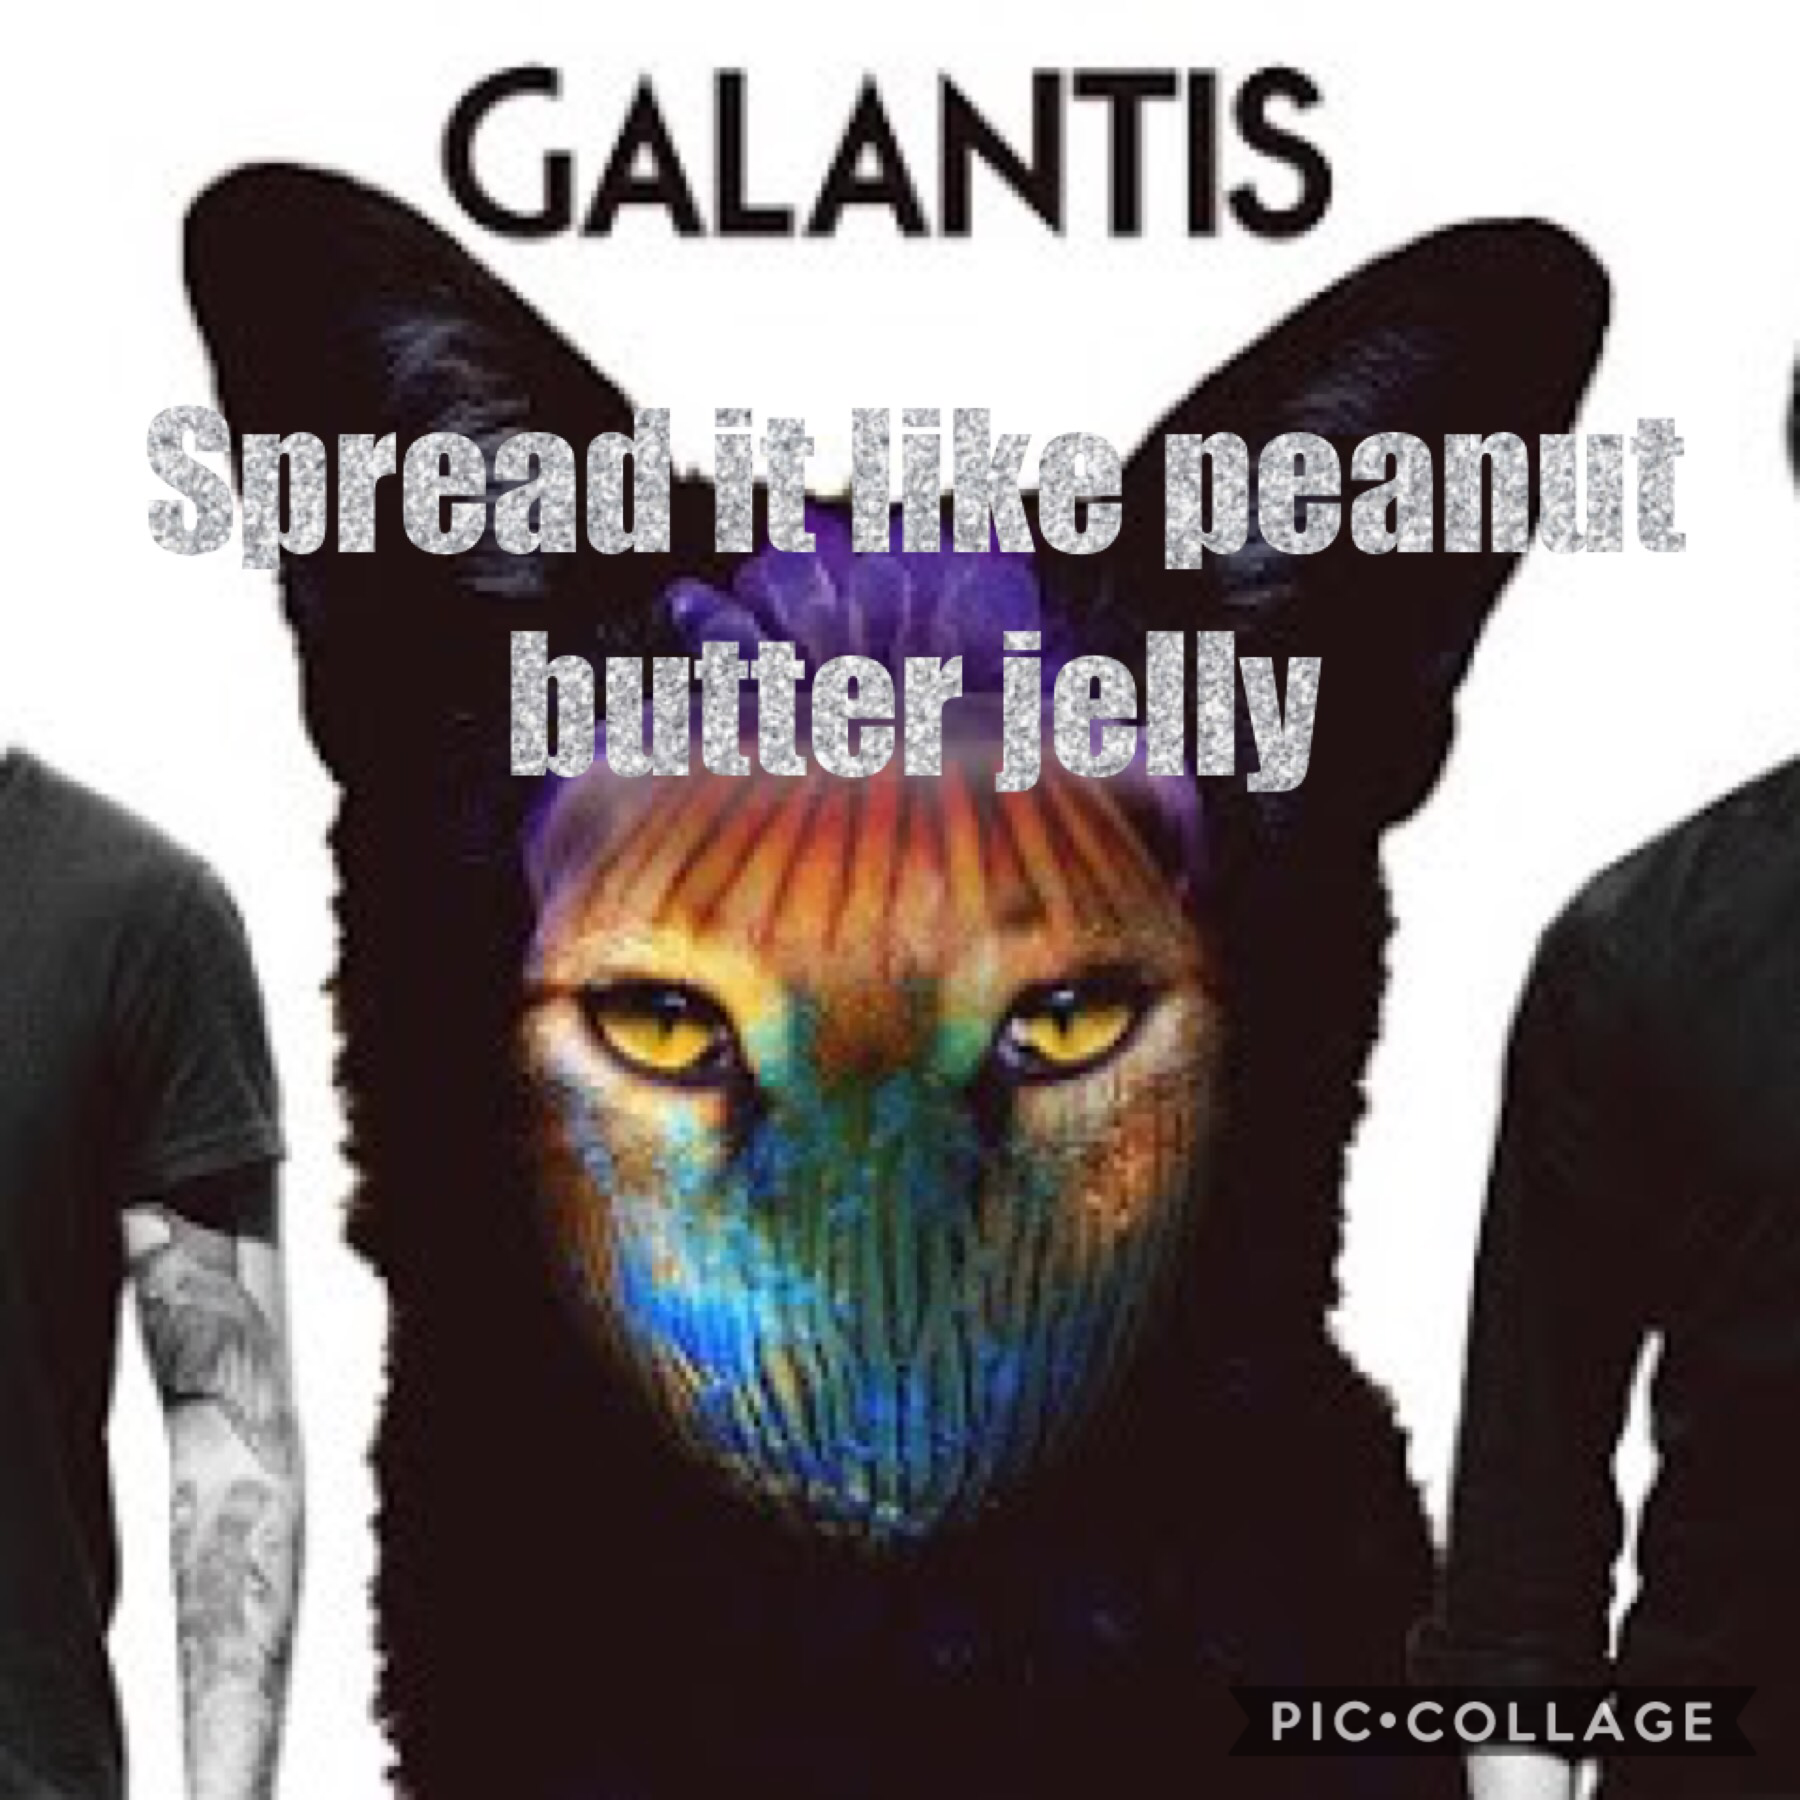 Galantis peanut butter jelly 